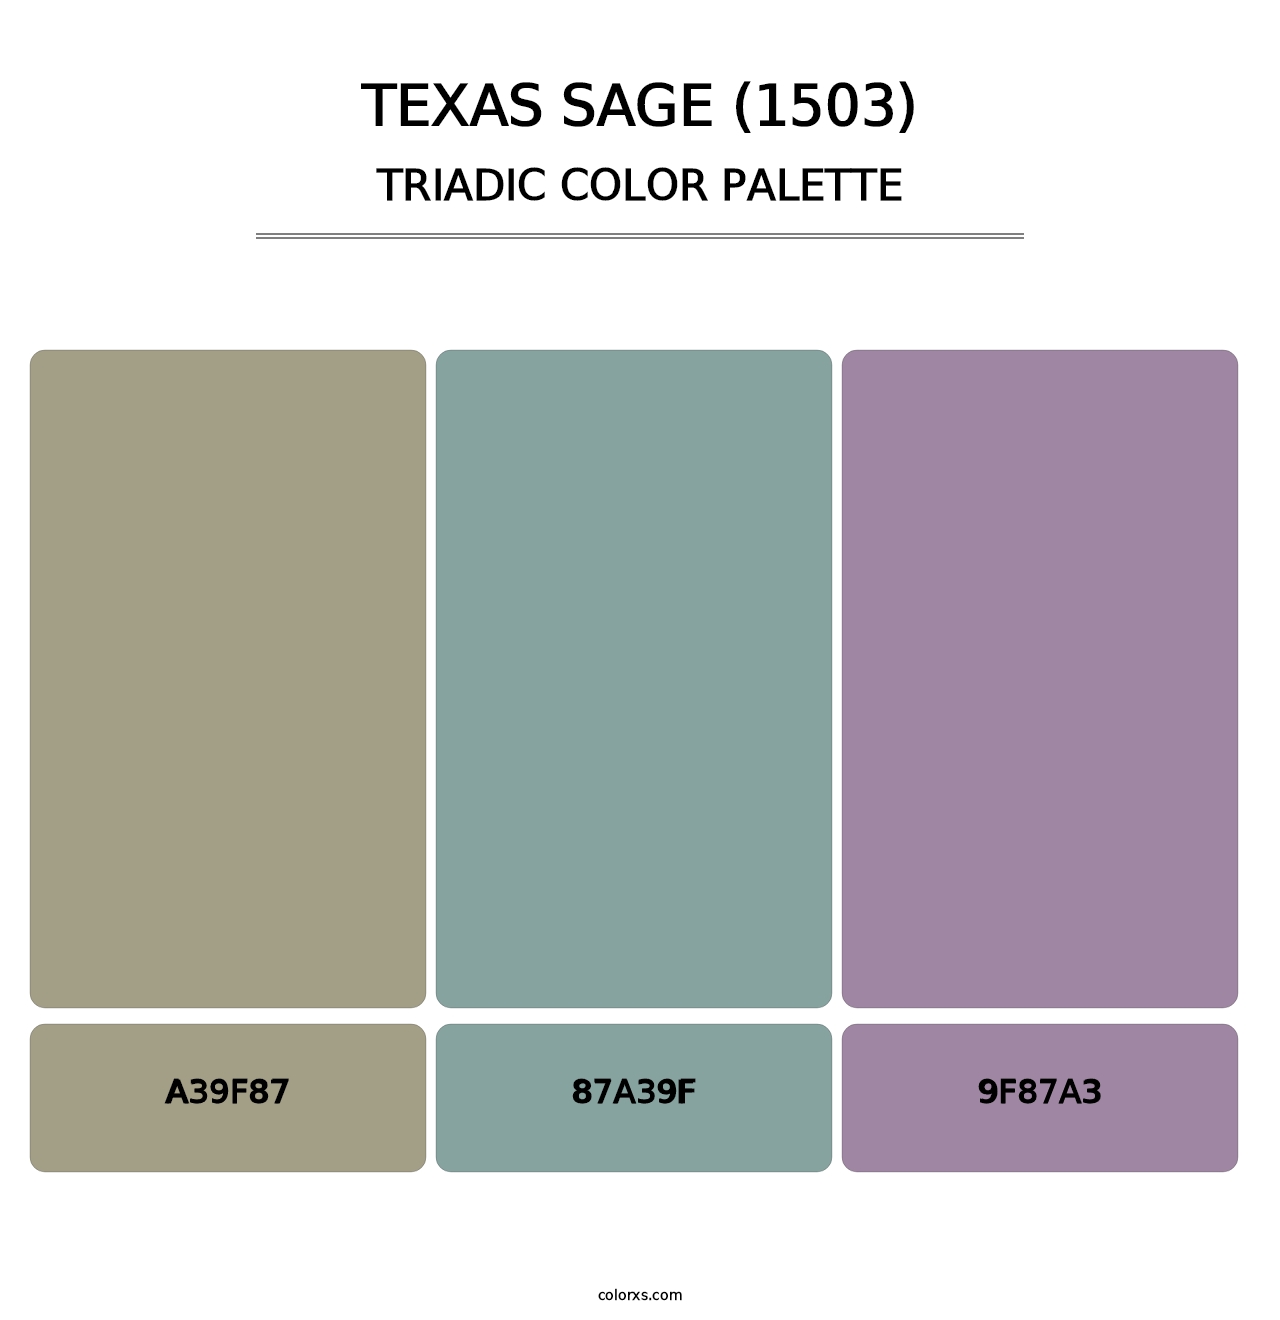 Texas Sage (1503) - Triadic Color Palette